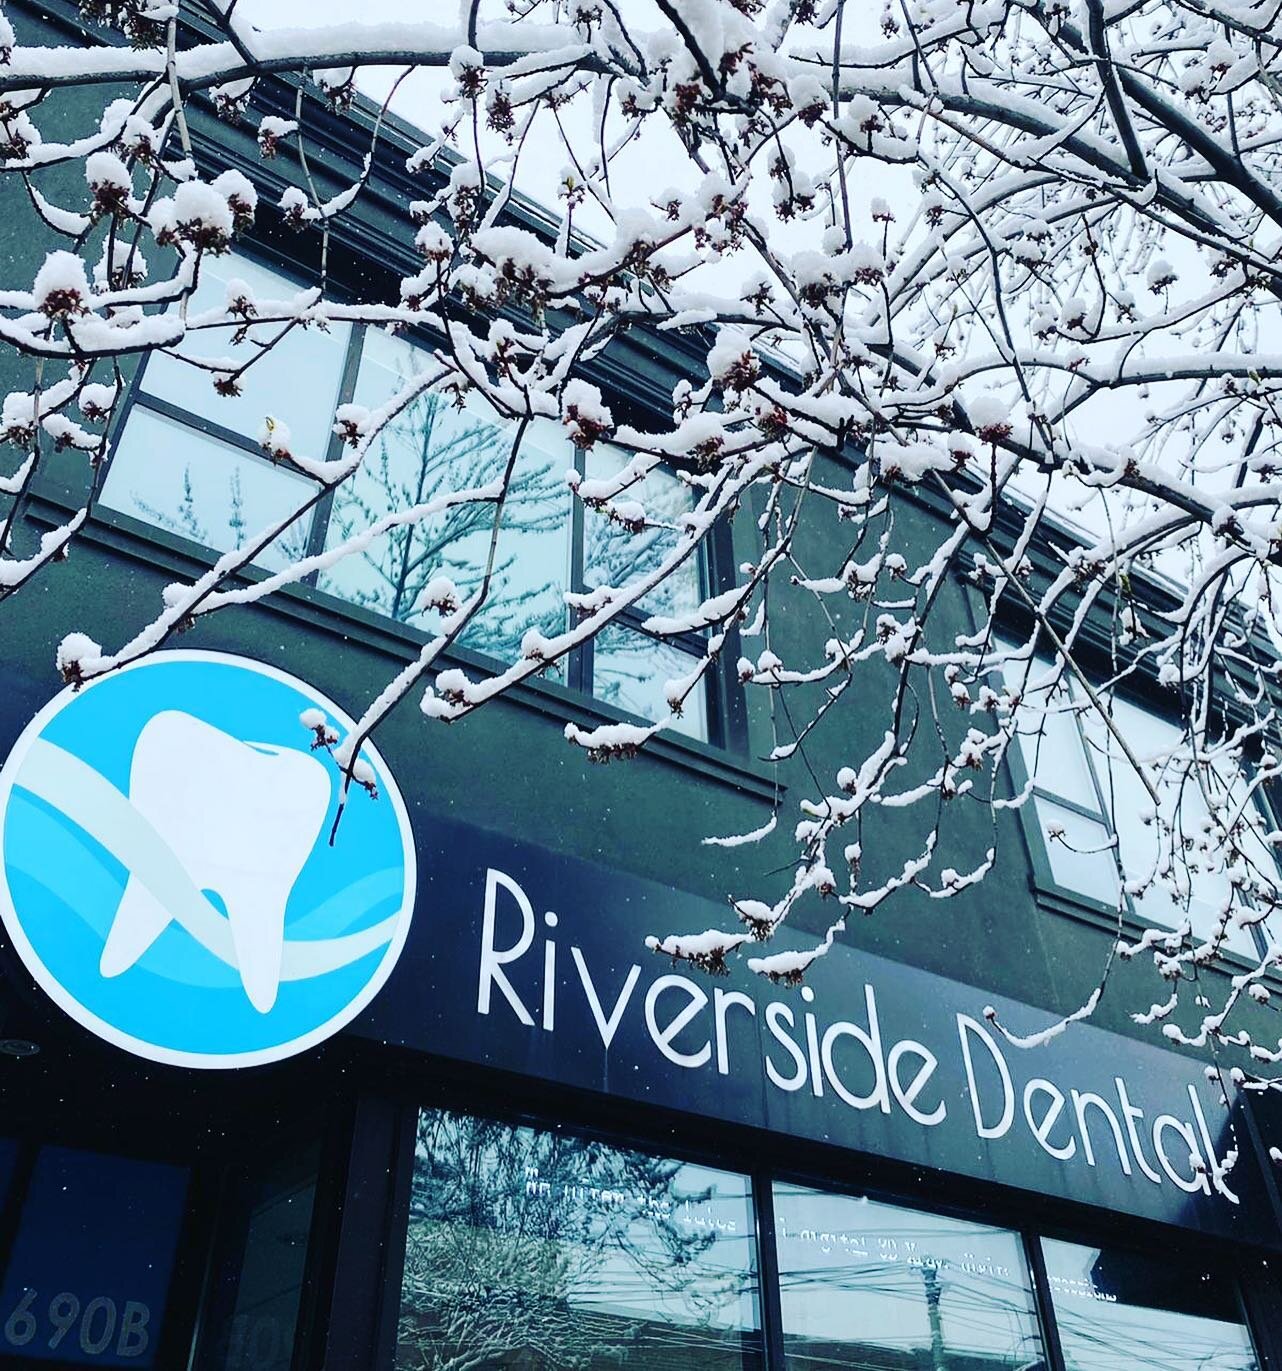 Riverside dental center creating smiles in sun or snow or zombie apocalypse 😅😅😅. April snow storms are always gorgeous